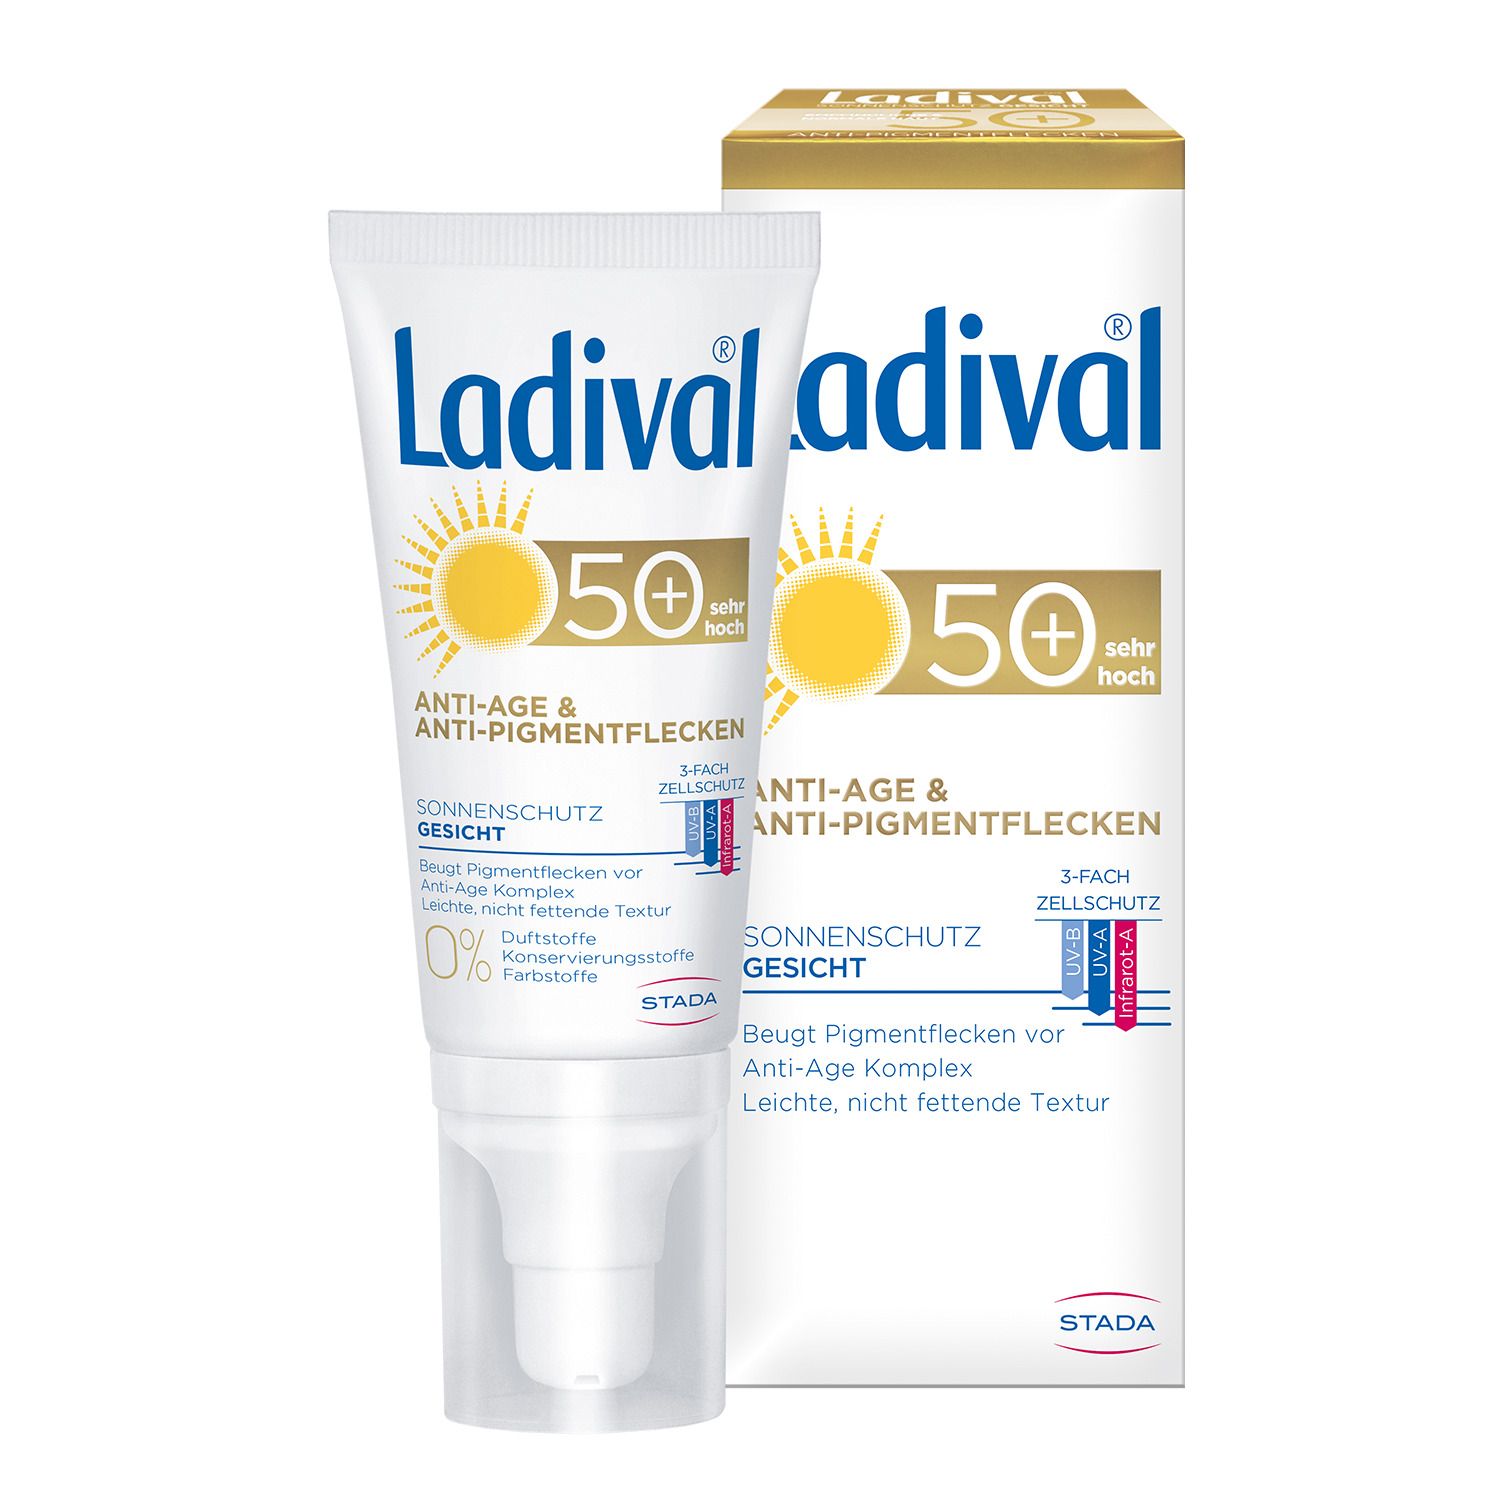 Ladival® Anti-Age & Anti-Pigmentflecken 50+ + Ladival Aktiv Spray LSF 50+  GRATIS